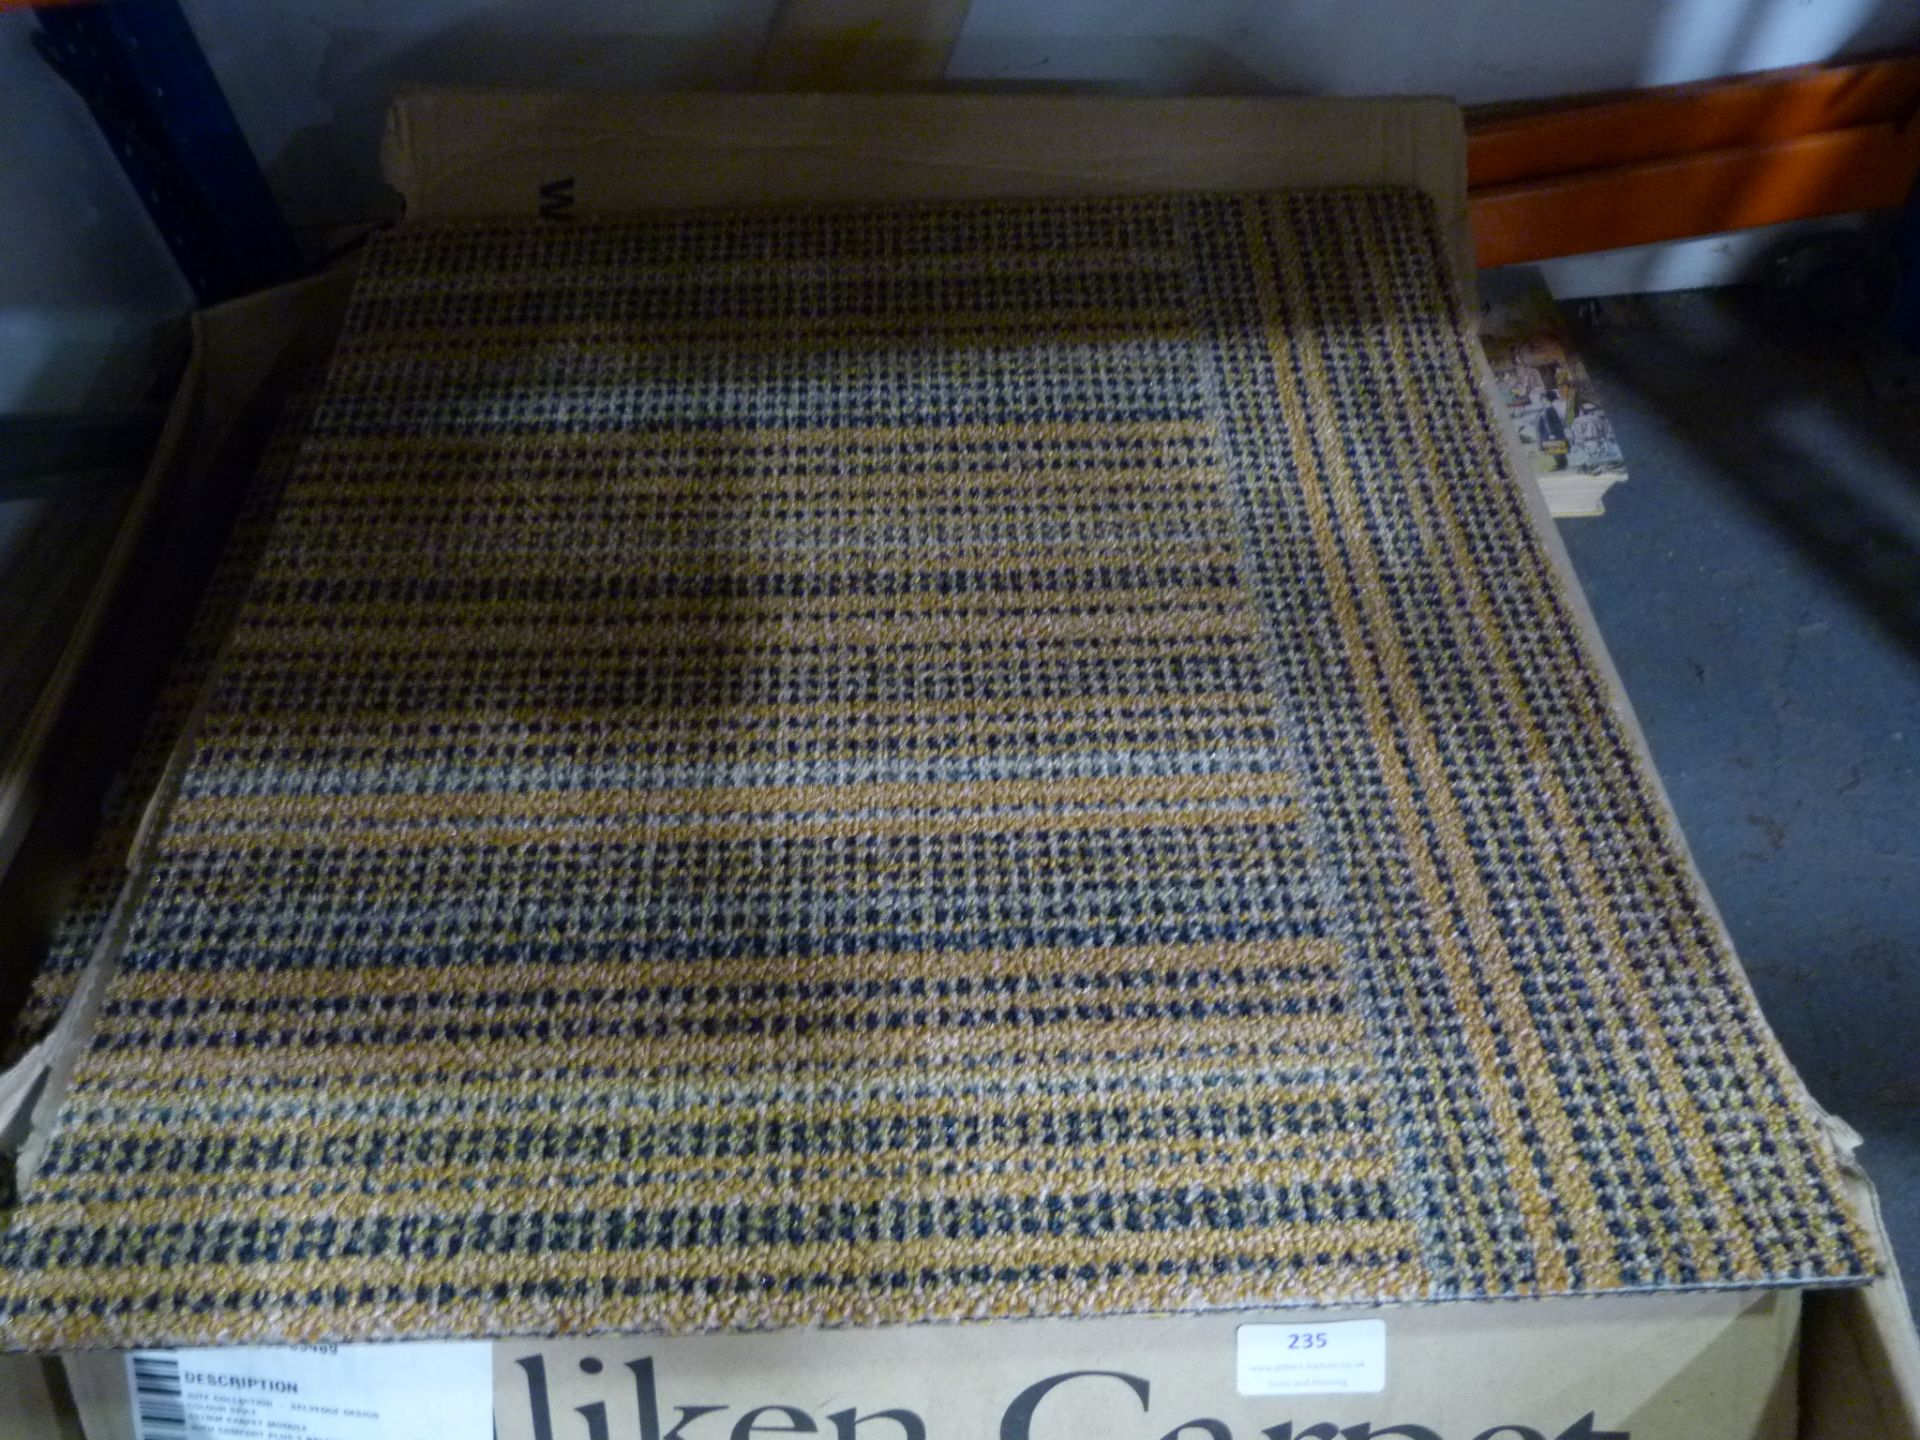 Sixteen Spice Carpet Tiles